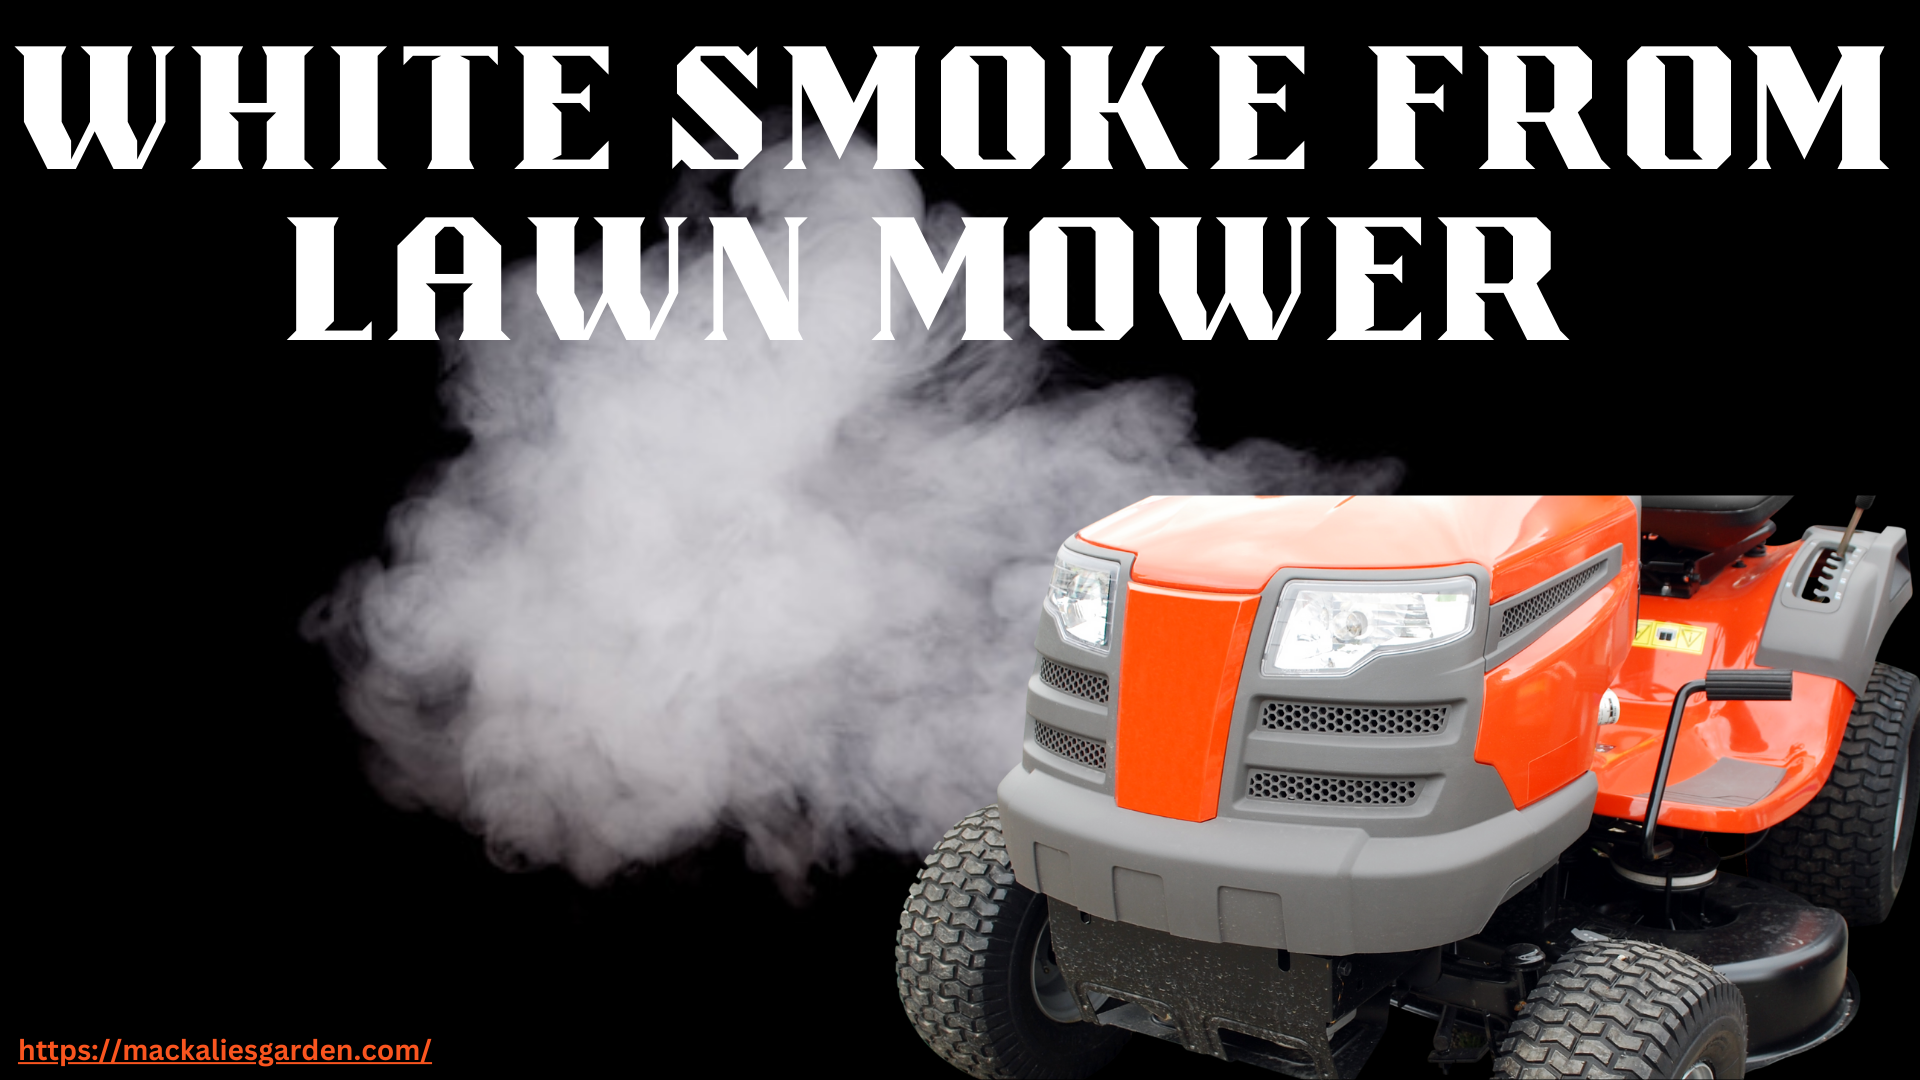 White smoke from lawn mower